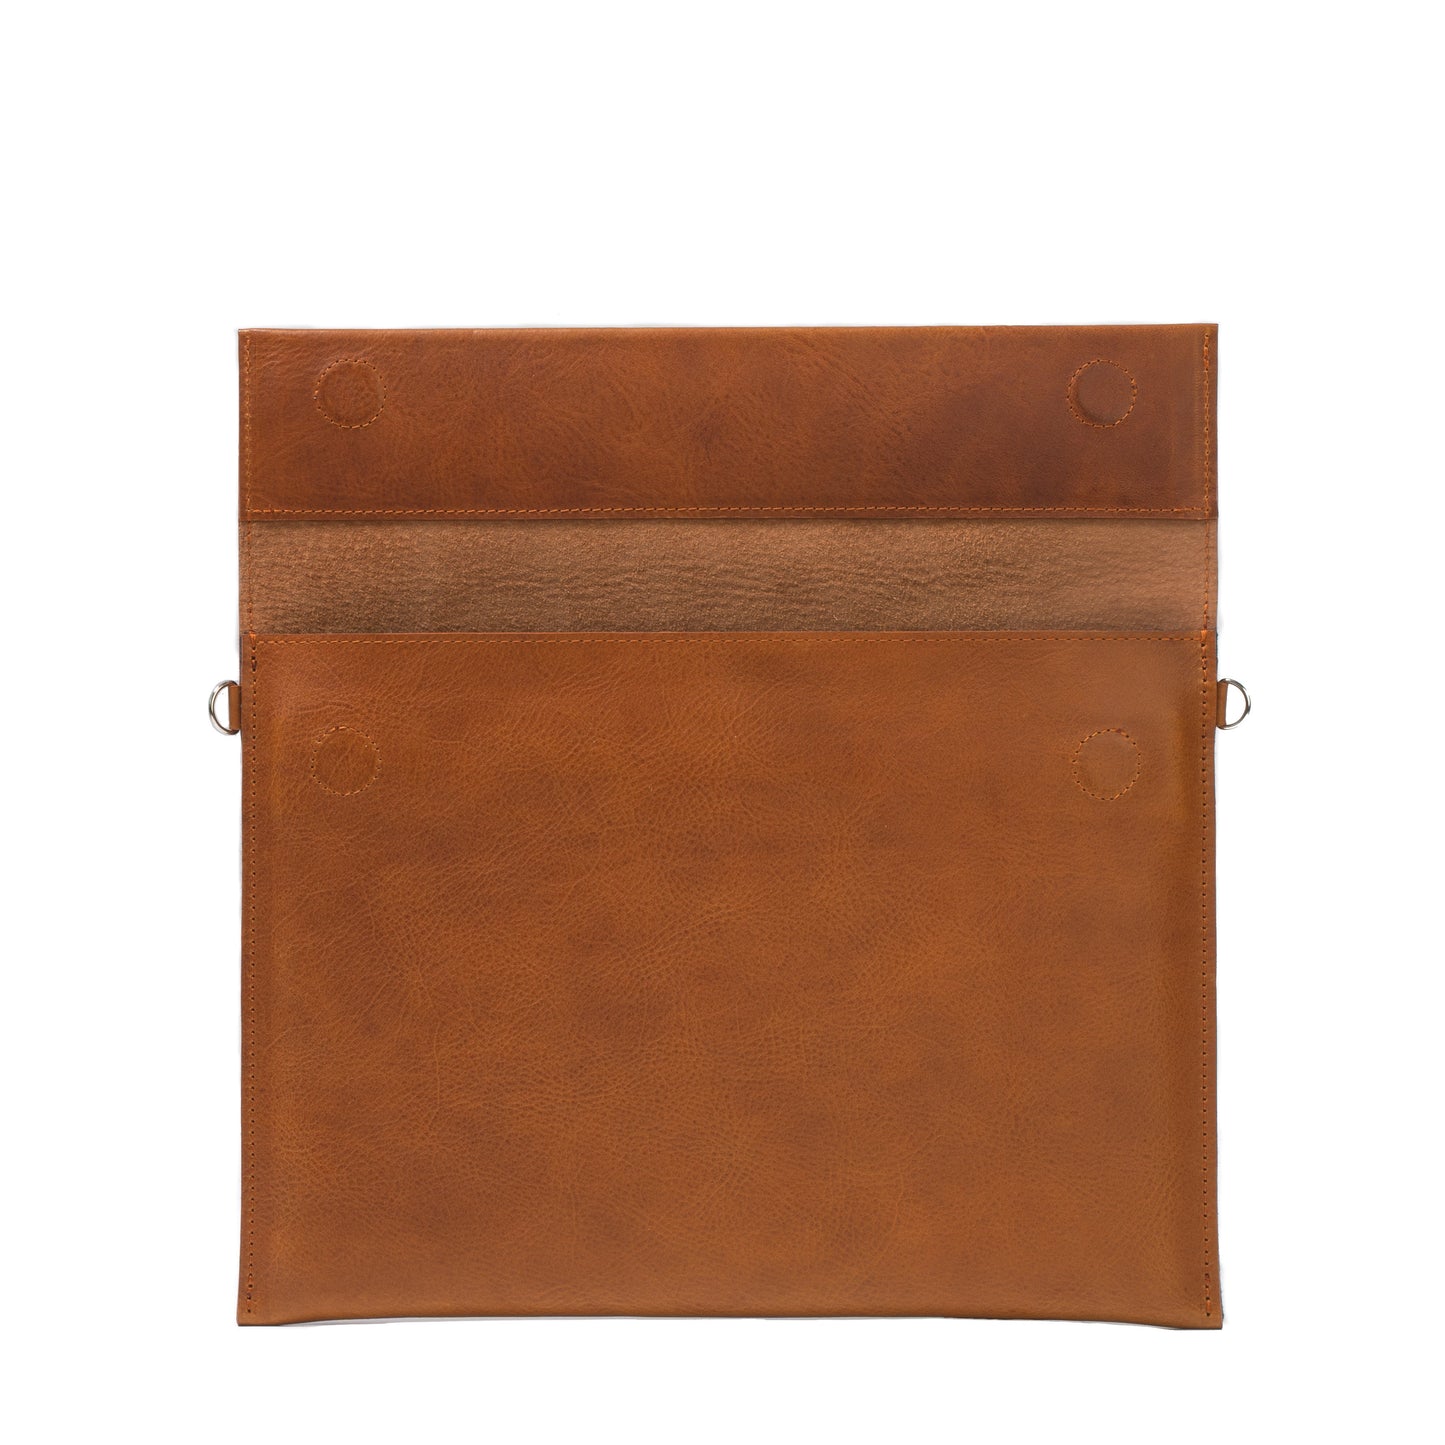 Leather Bag for iPad - The Minimalist 2.0-4